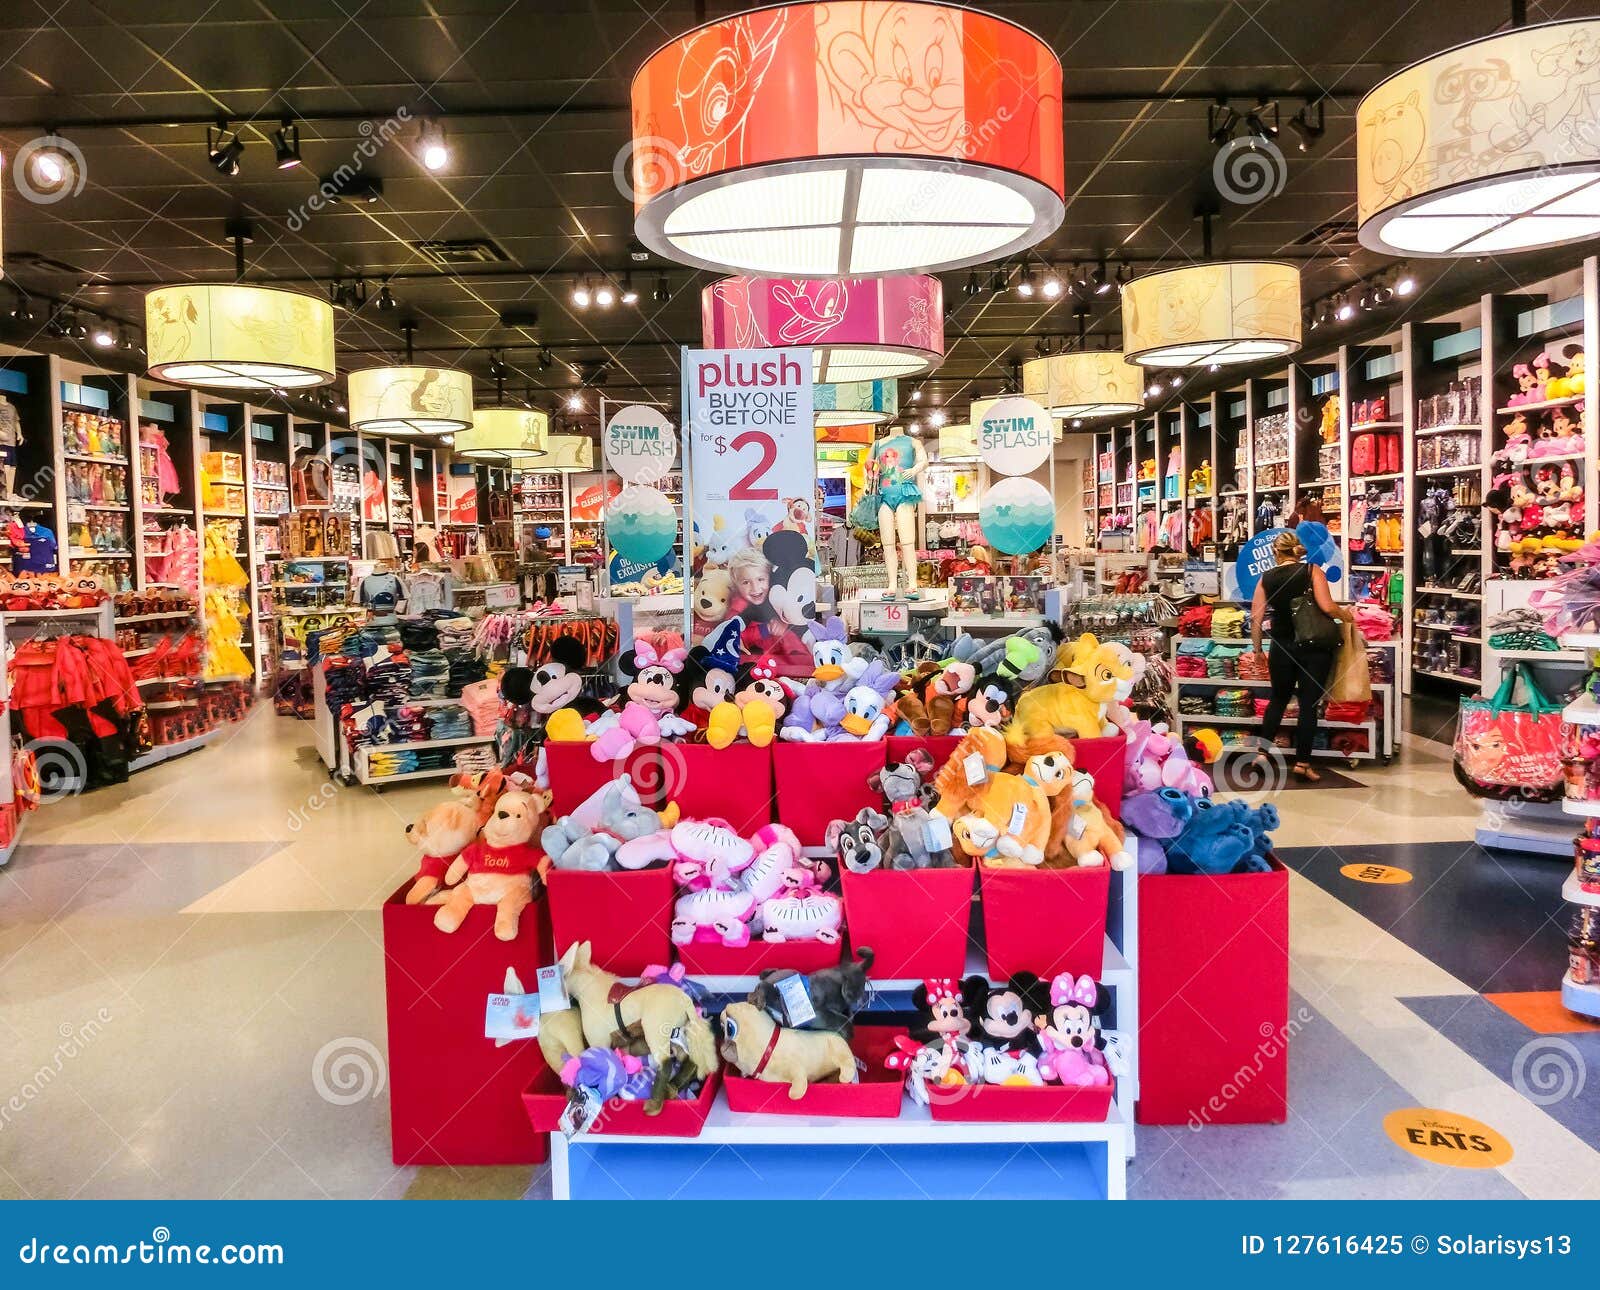 Orlando Usa May 10 2018 The Colorful Toys At Disney Store